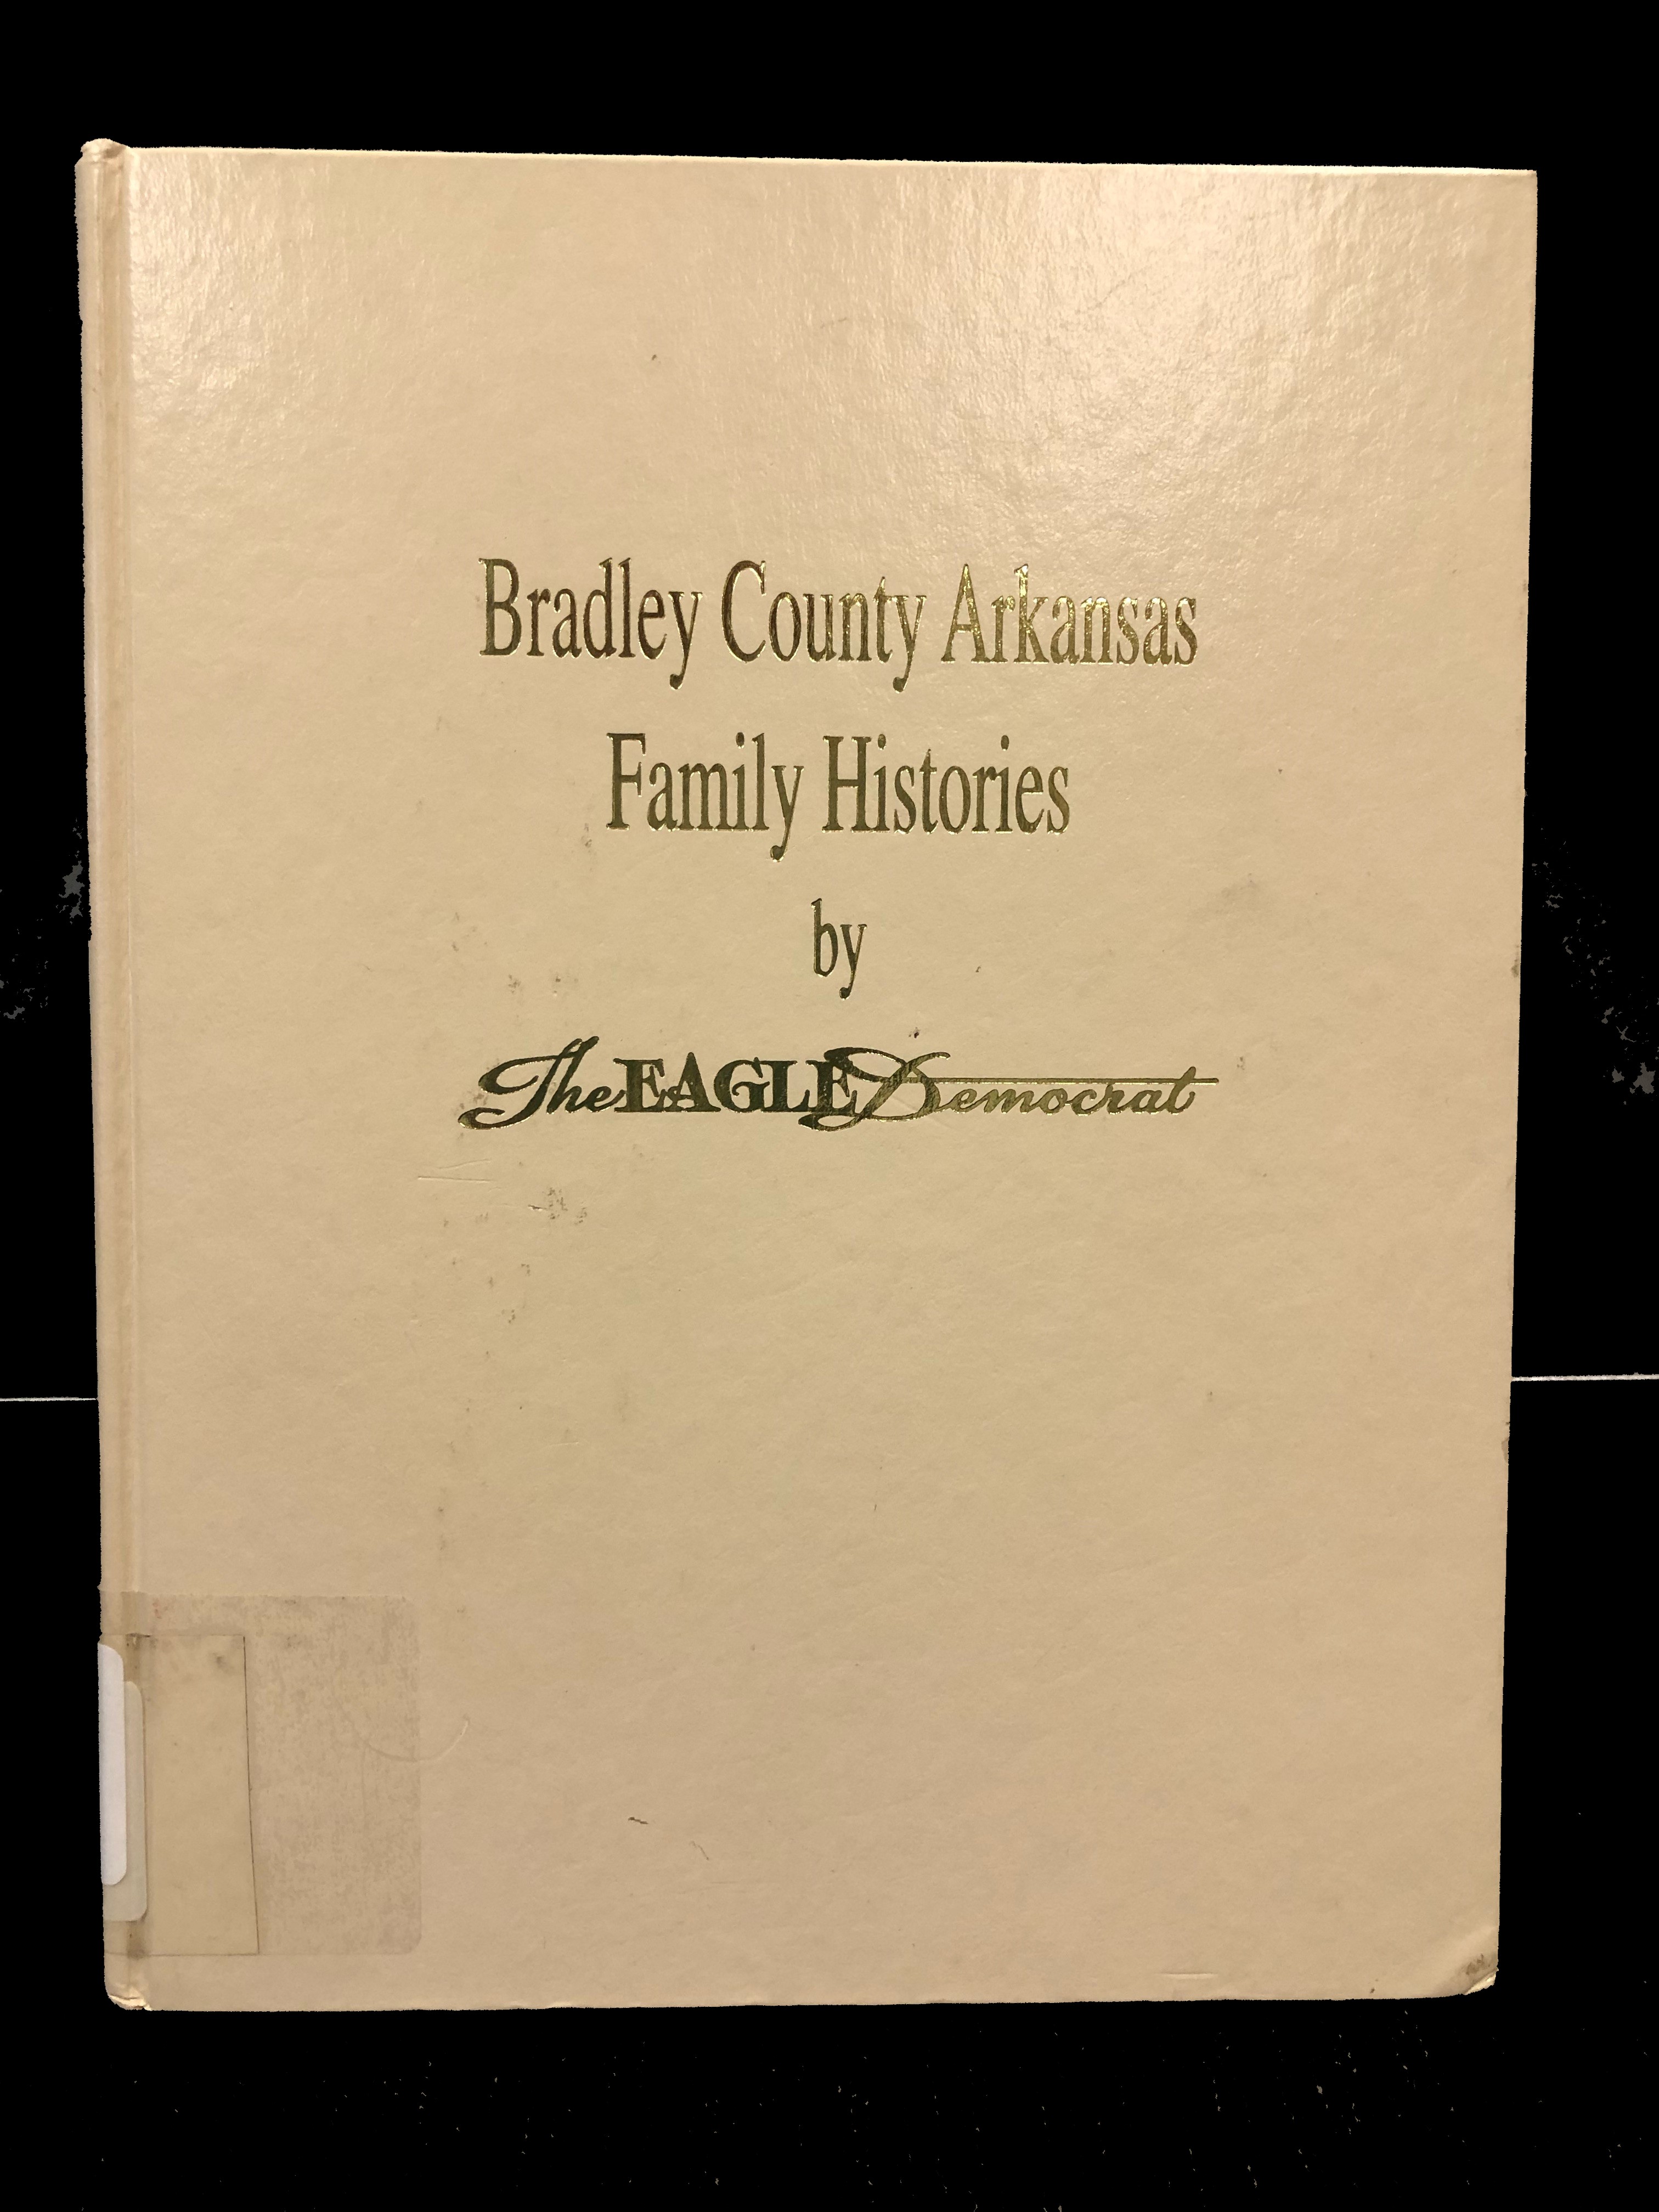 Bradley County Arkansas Family Histories